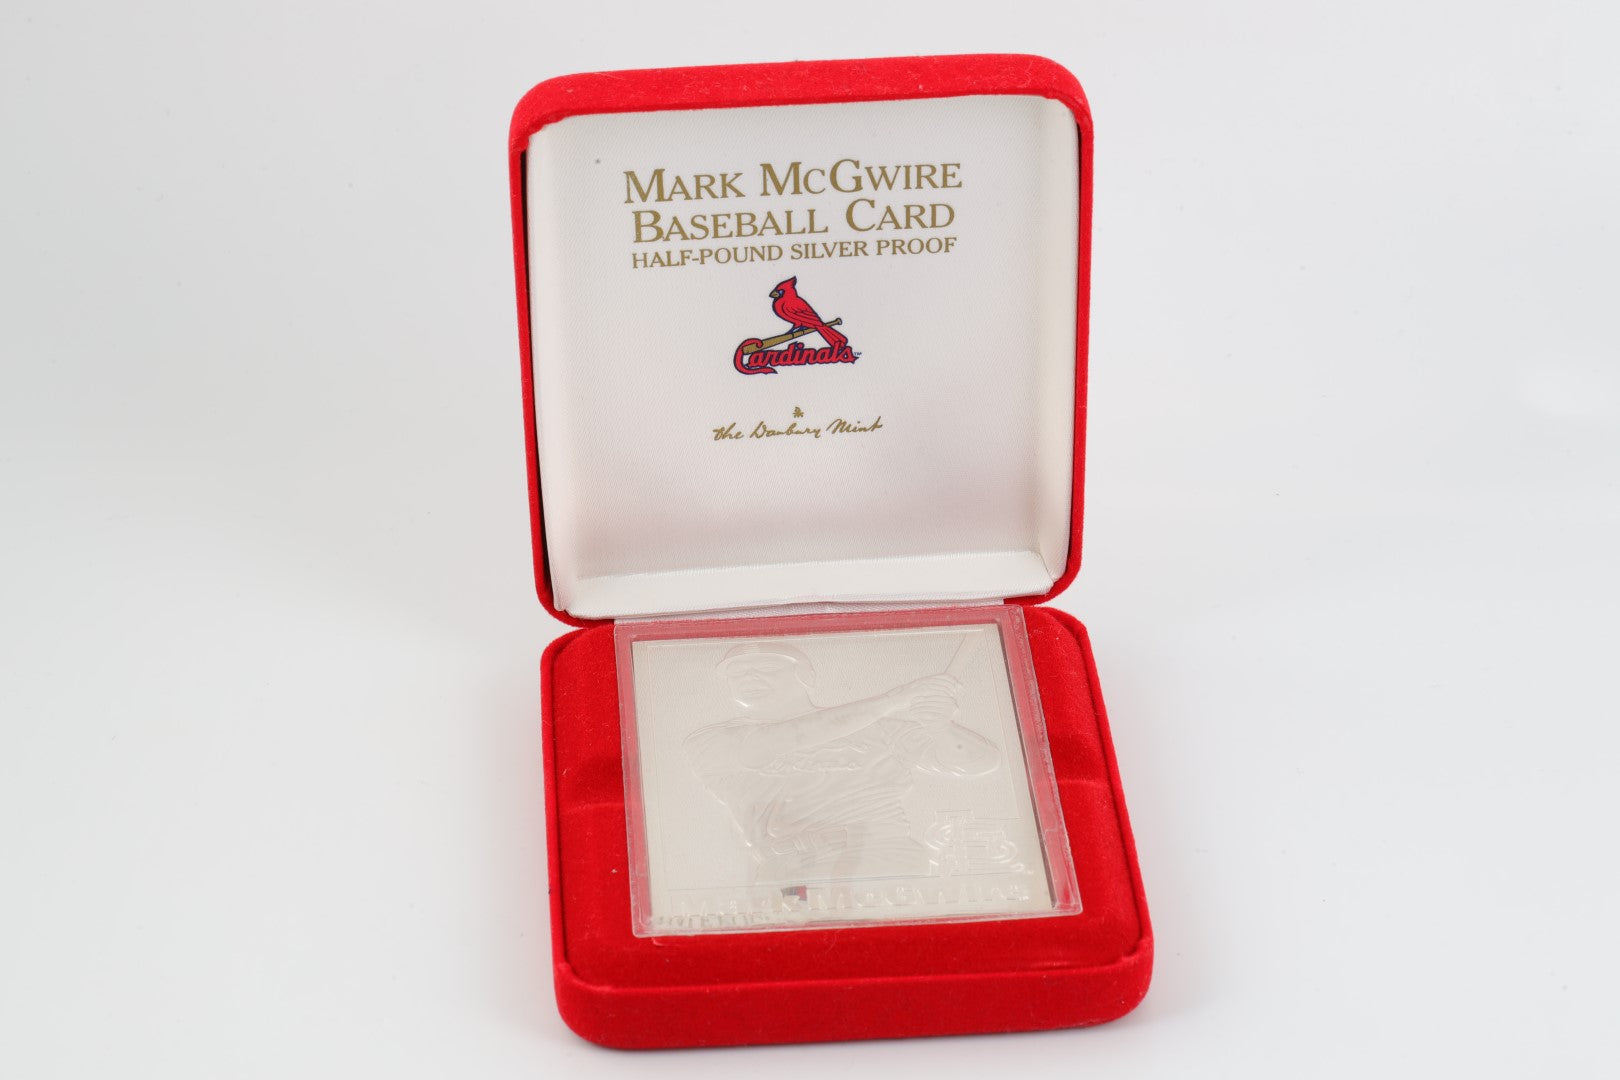 999 Silver Mark McGwire Baseball Card Bar (252.98g.) – Chorost & Co.